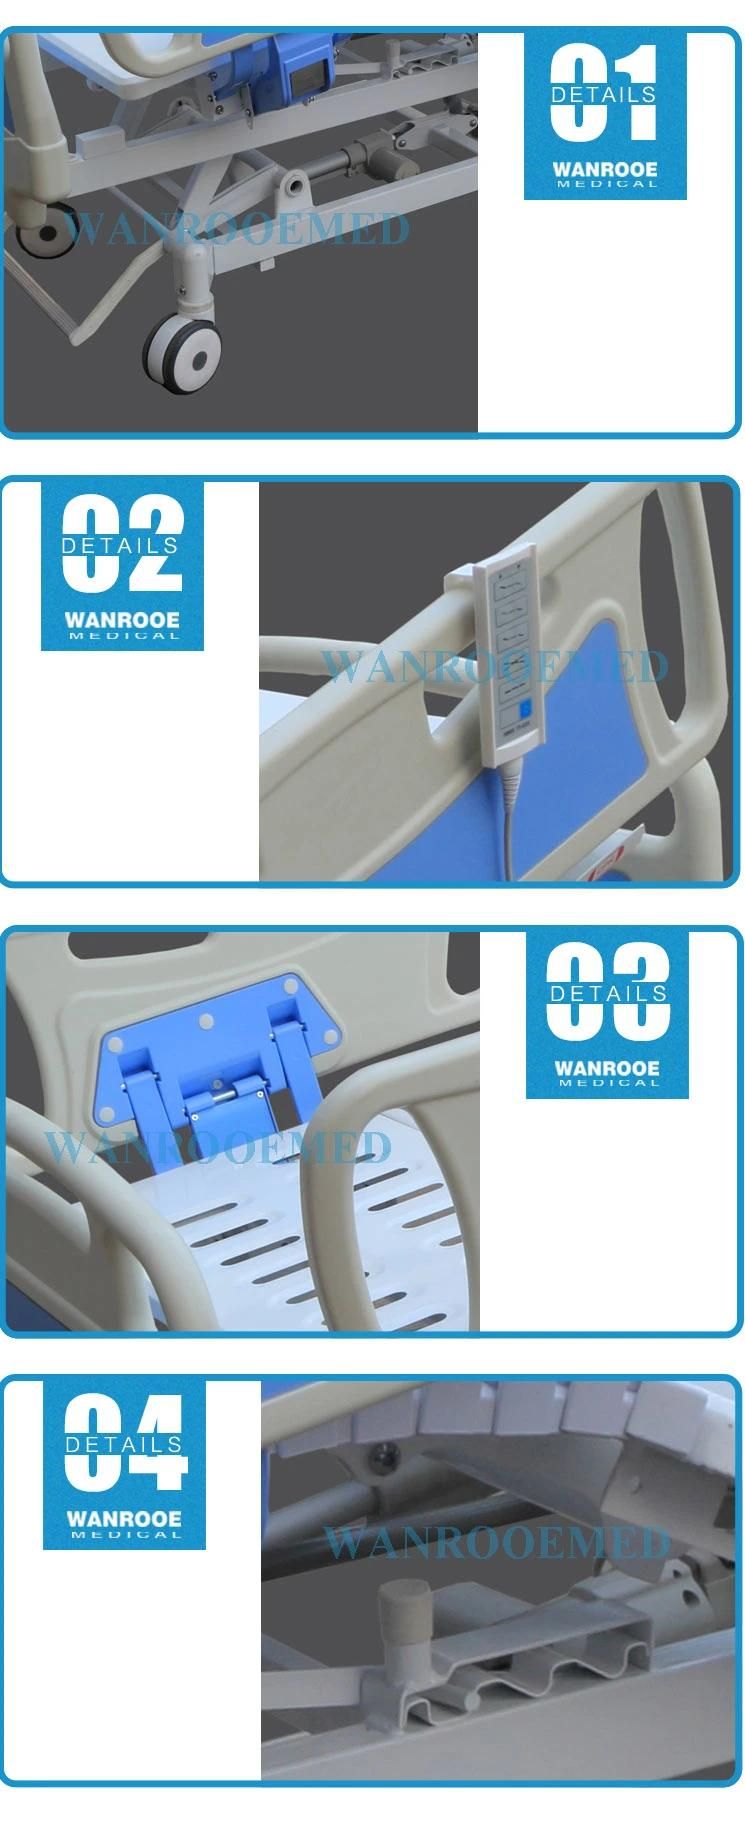 Bae505A Medical Furniture Five Functions ICU Nursing Electric Adjustable Hospital Bed